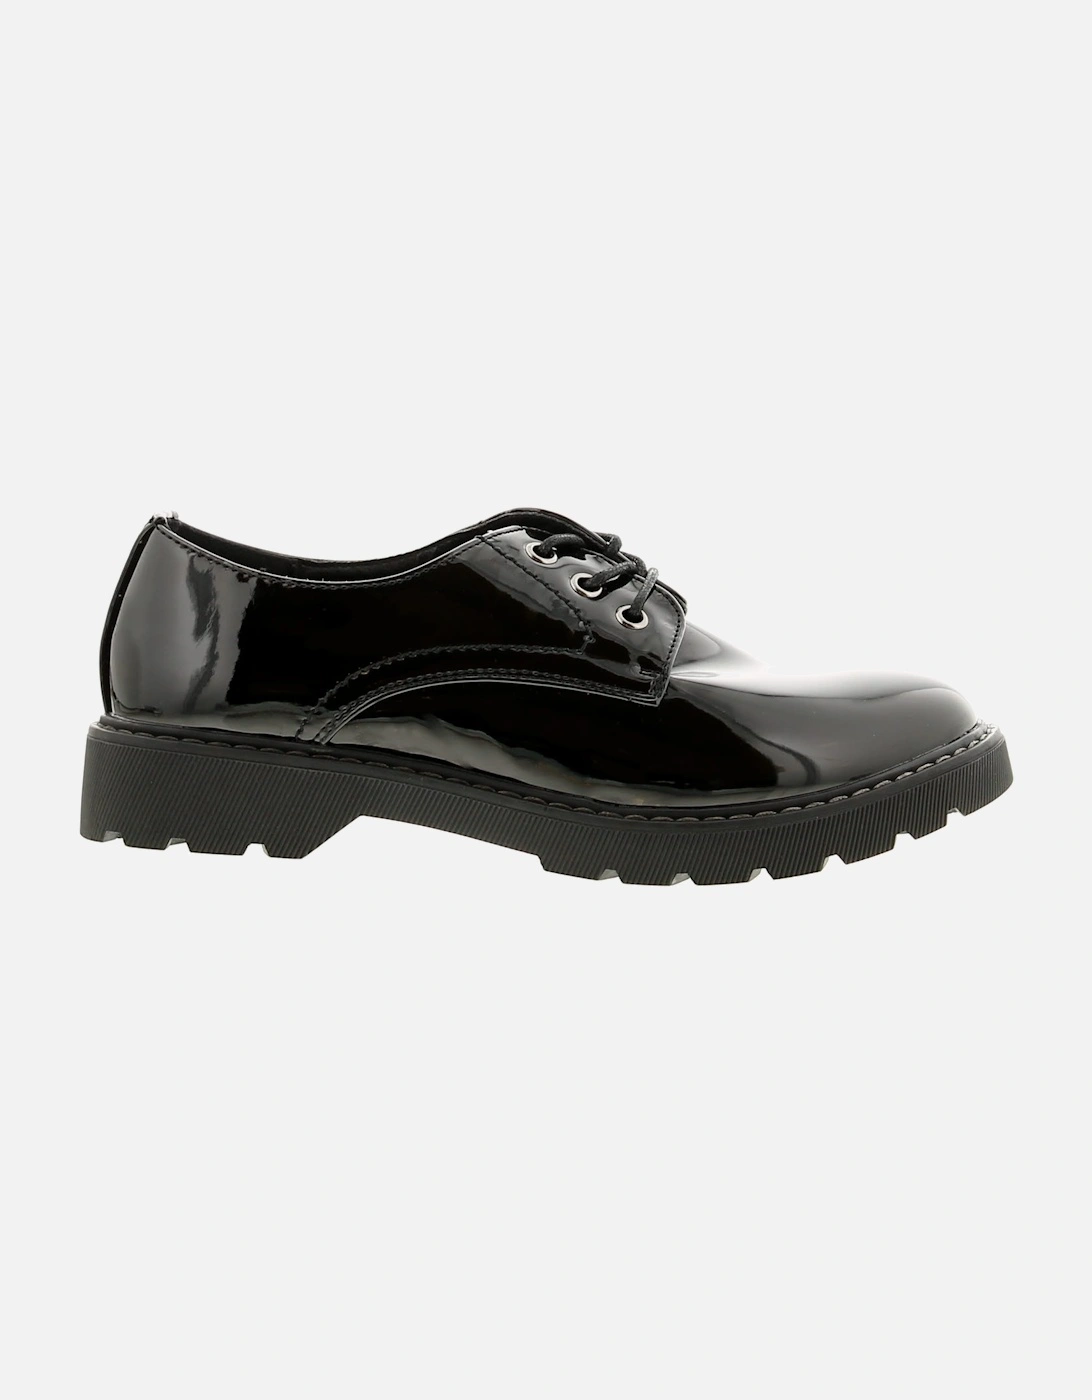 Womens Flat Shoes Katala Lace Up black patent UK Size